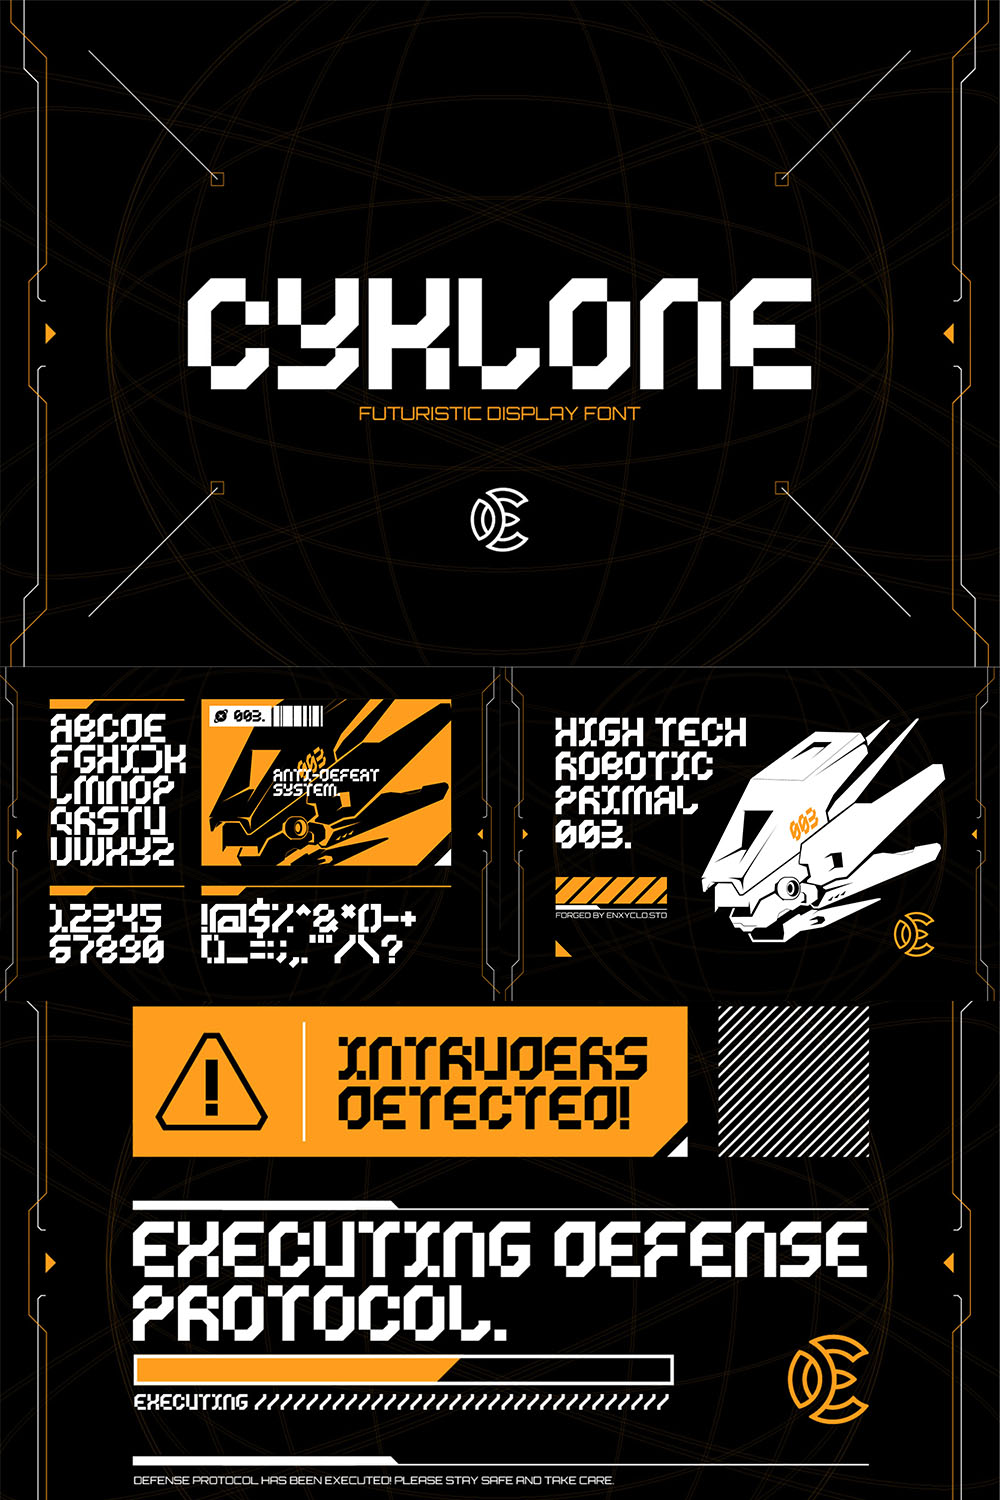 CYKLONE - Futuristic Display Font pinterest image.